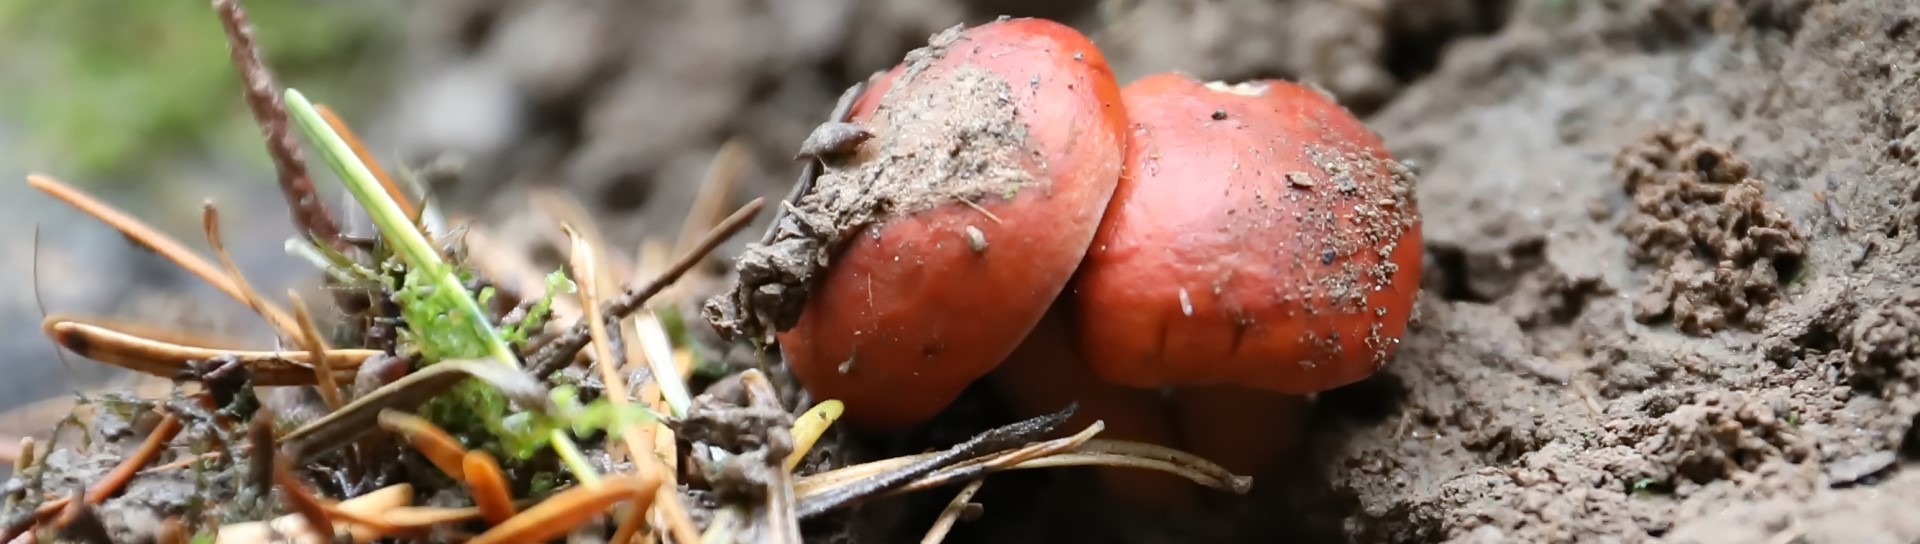 WAITLIST – Fall Mushroom Discovery